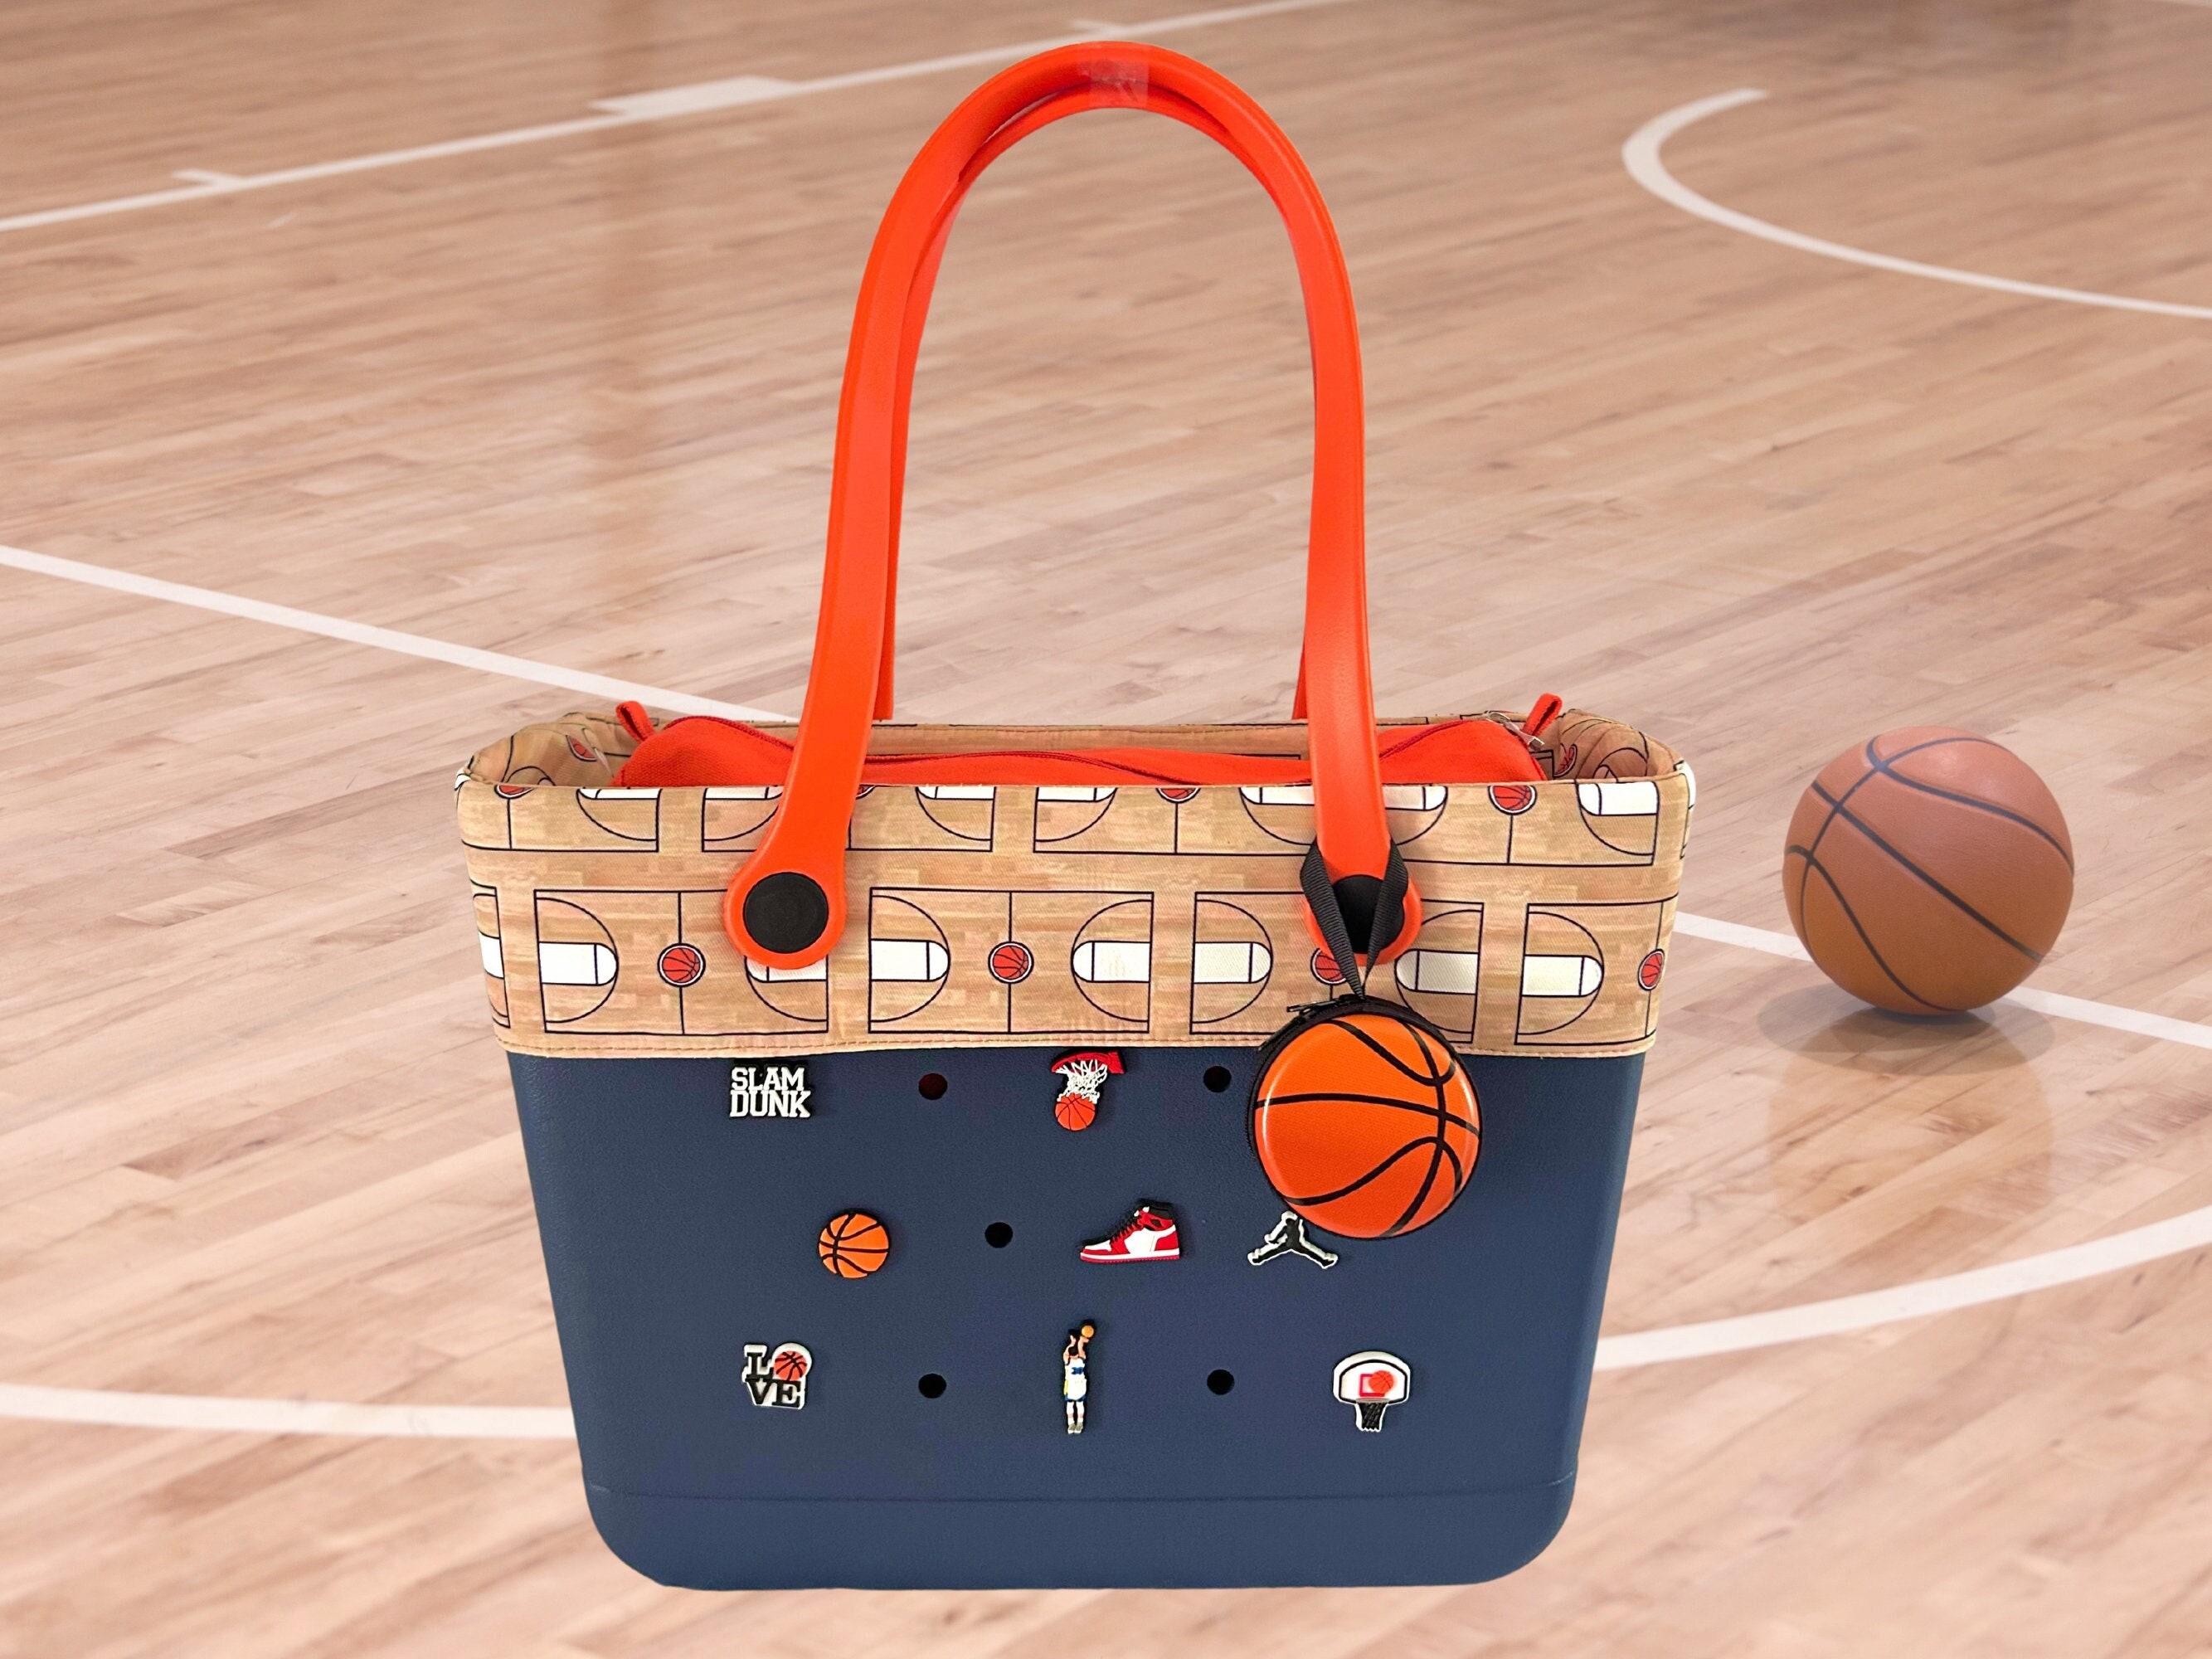  AUUXVA Canvas Tote Bag Heart Shape Basketball Sports